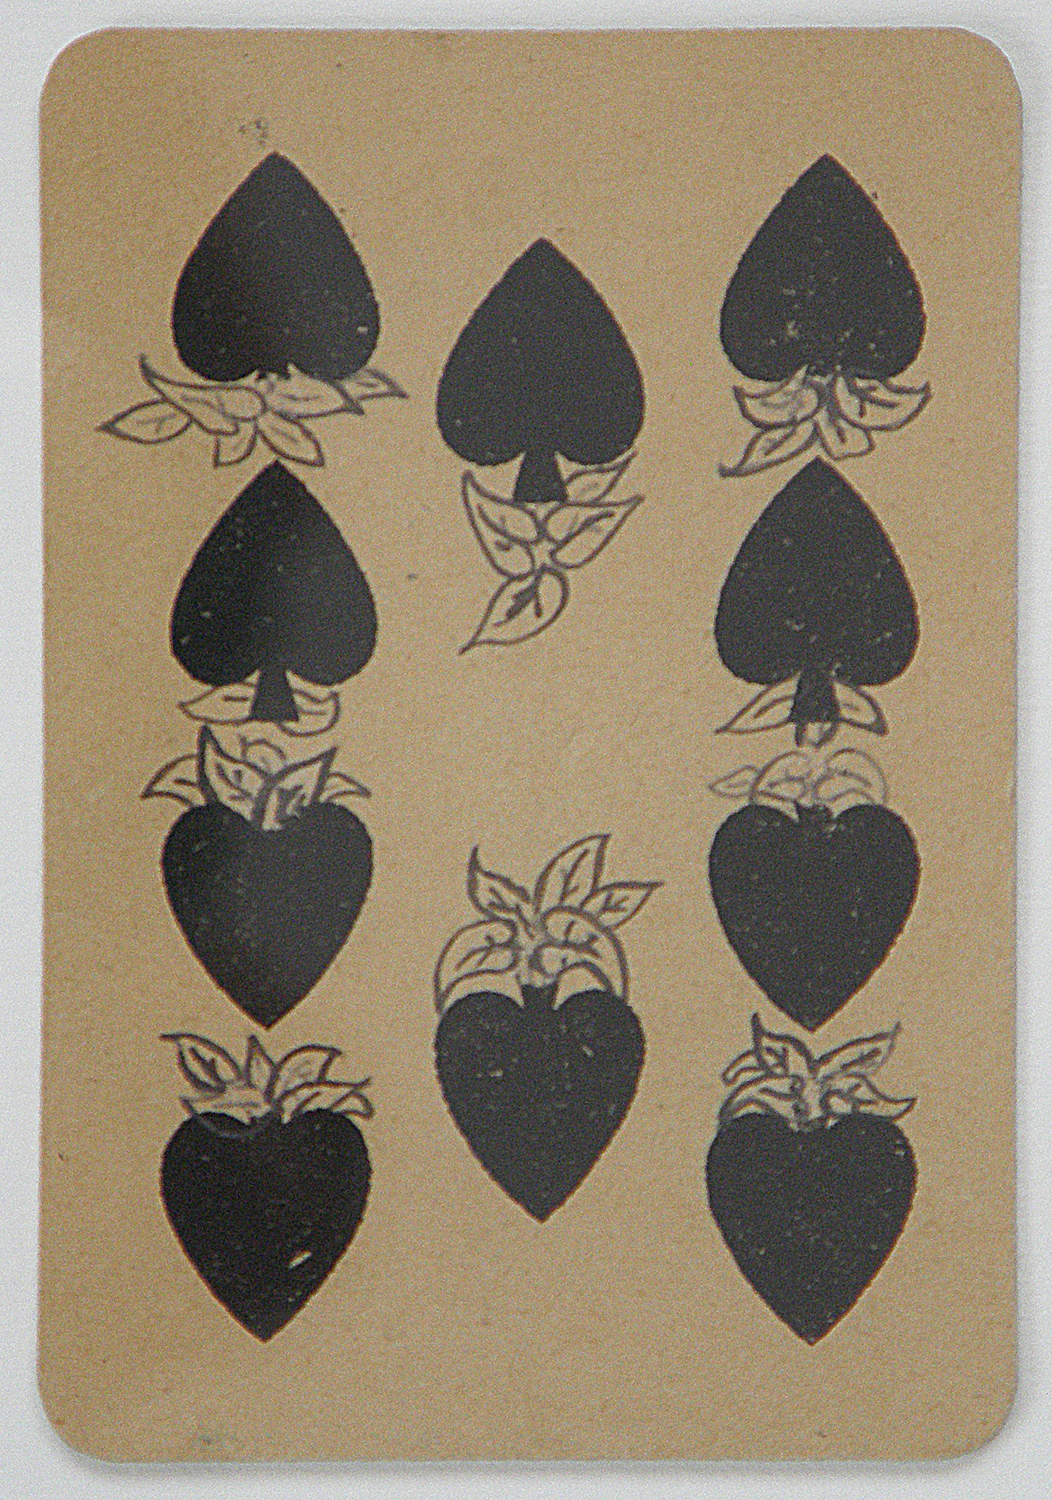 ten of spades